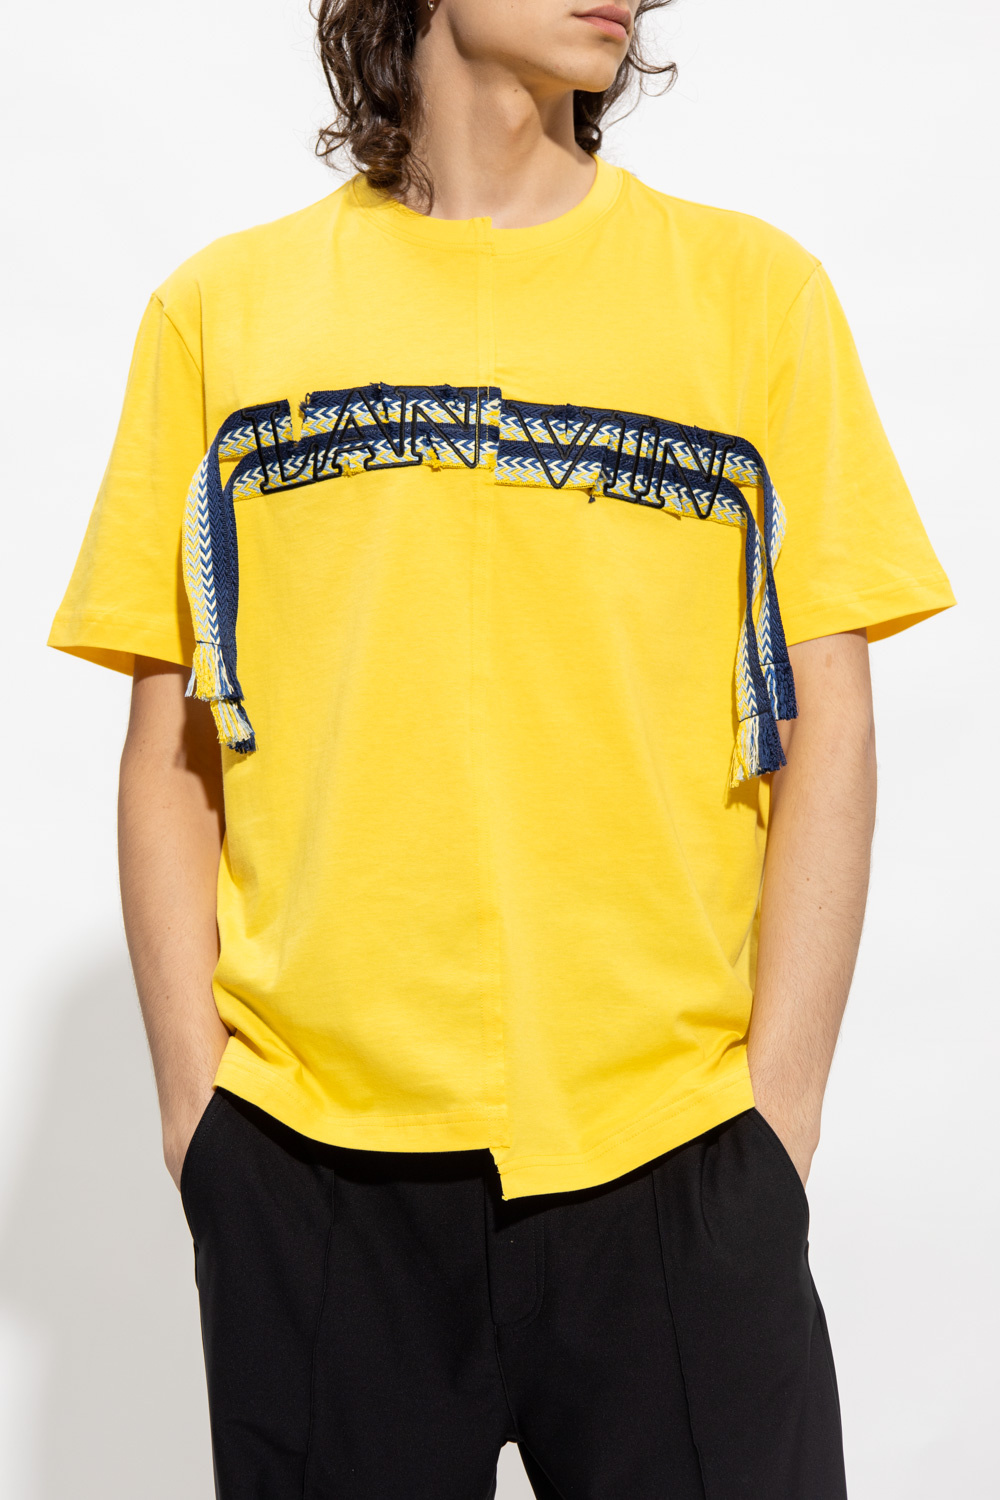 Lanvin kremowy t-shirt bez rękawów